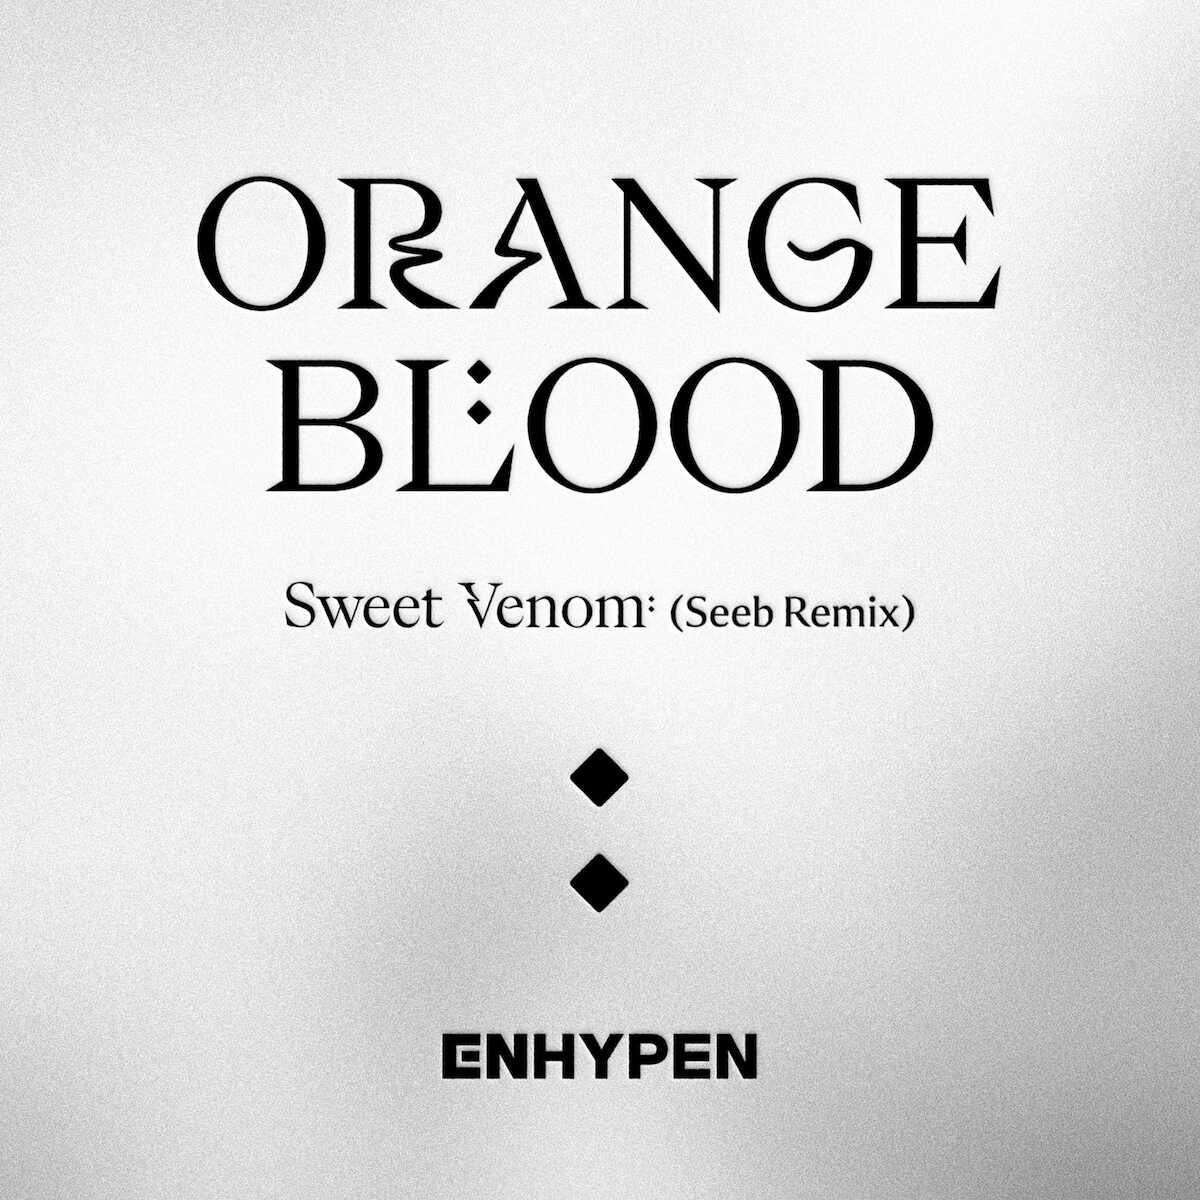 ENHYPEN 「Sweet Venom(Seeb Remix)」の音源とビジュアライザー映像を公開